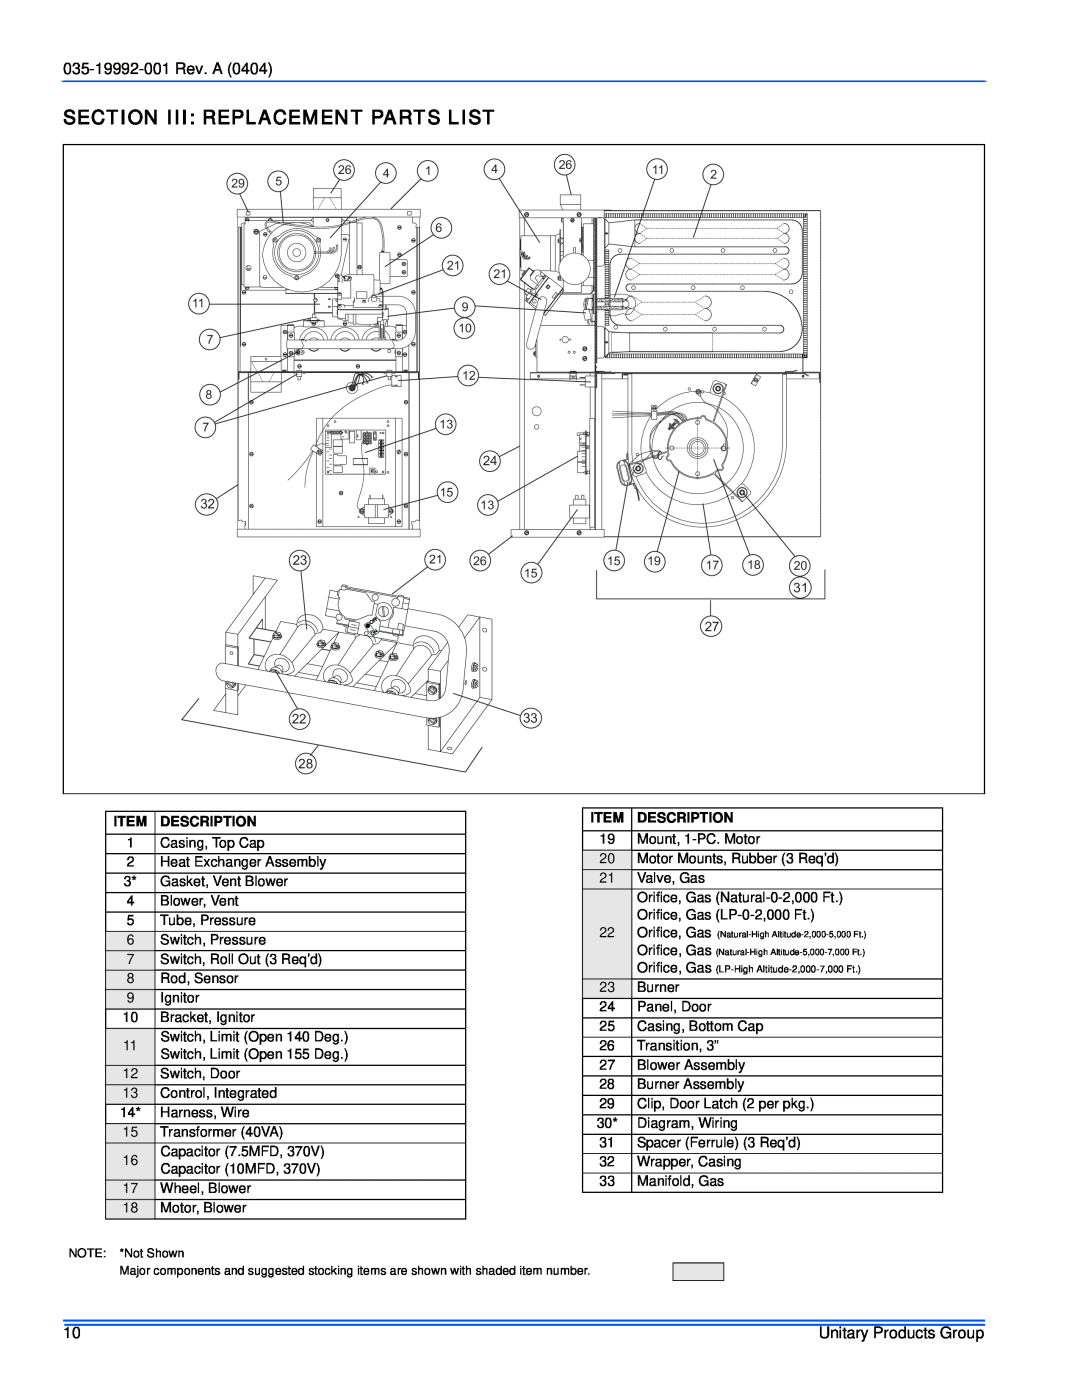 York GF8, G8C service manual Section Iii Replacement Parts List, Description, 035-19992-001Rev. A 